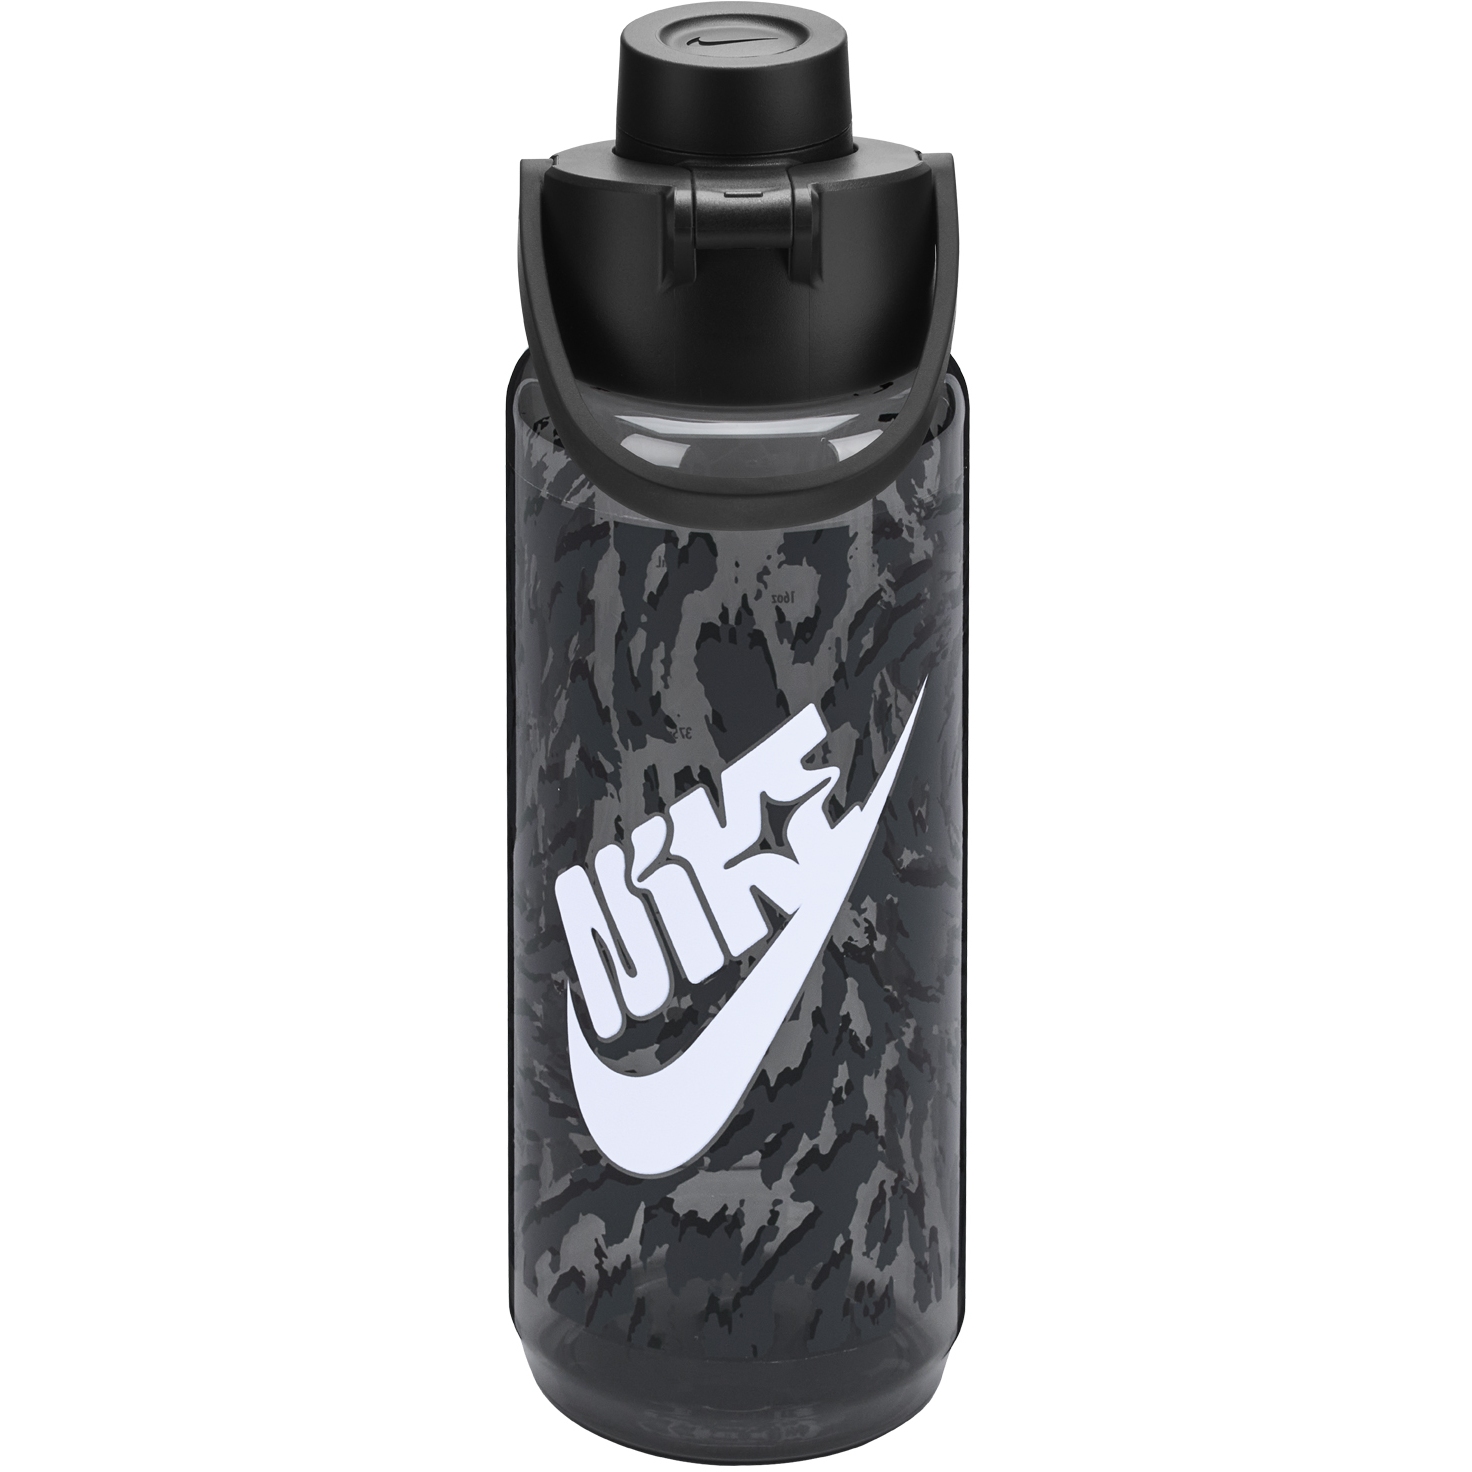 Produktbild von Nike Tritan Renew Recharge Trinkflasche 24 oz / 709ml - smoke grey/black/white 041